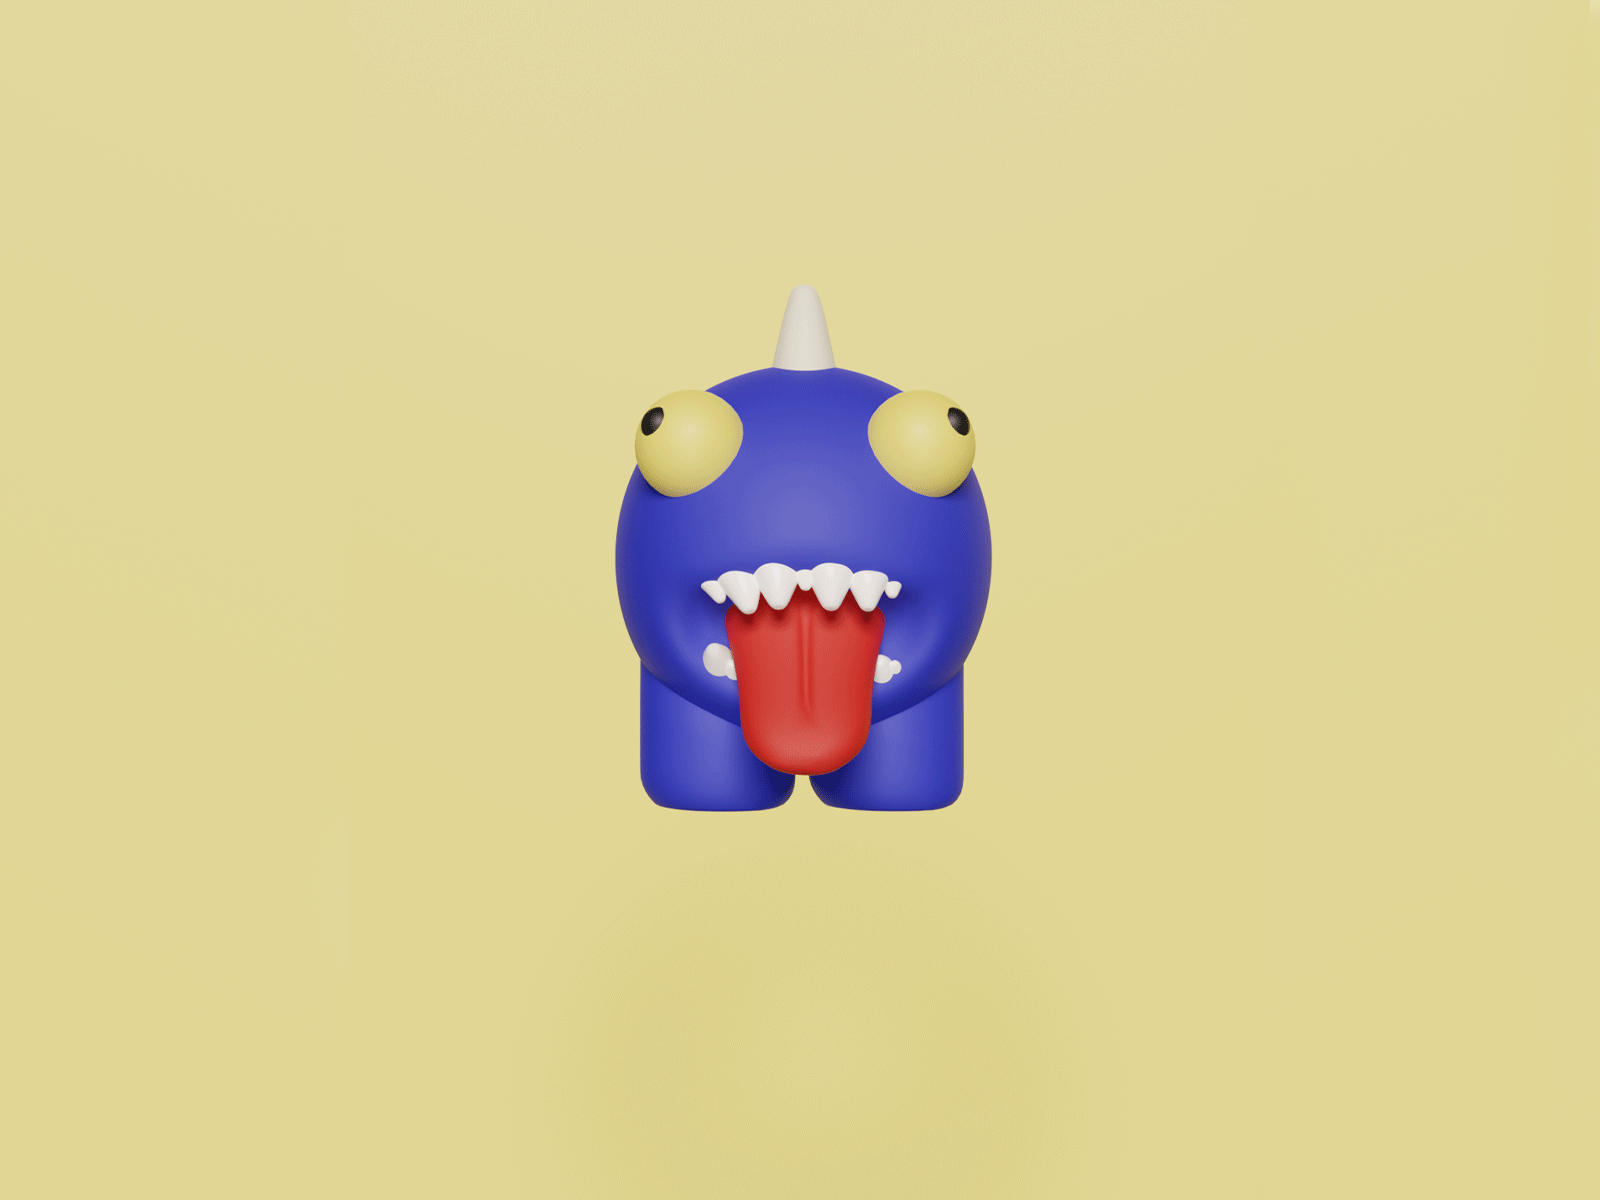 Monster Tongue | Designer Toy 3d 3d art 3d modeling 3d toy animation art toy blender character design design designer toy illustration monster character